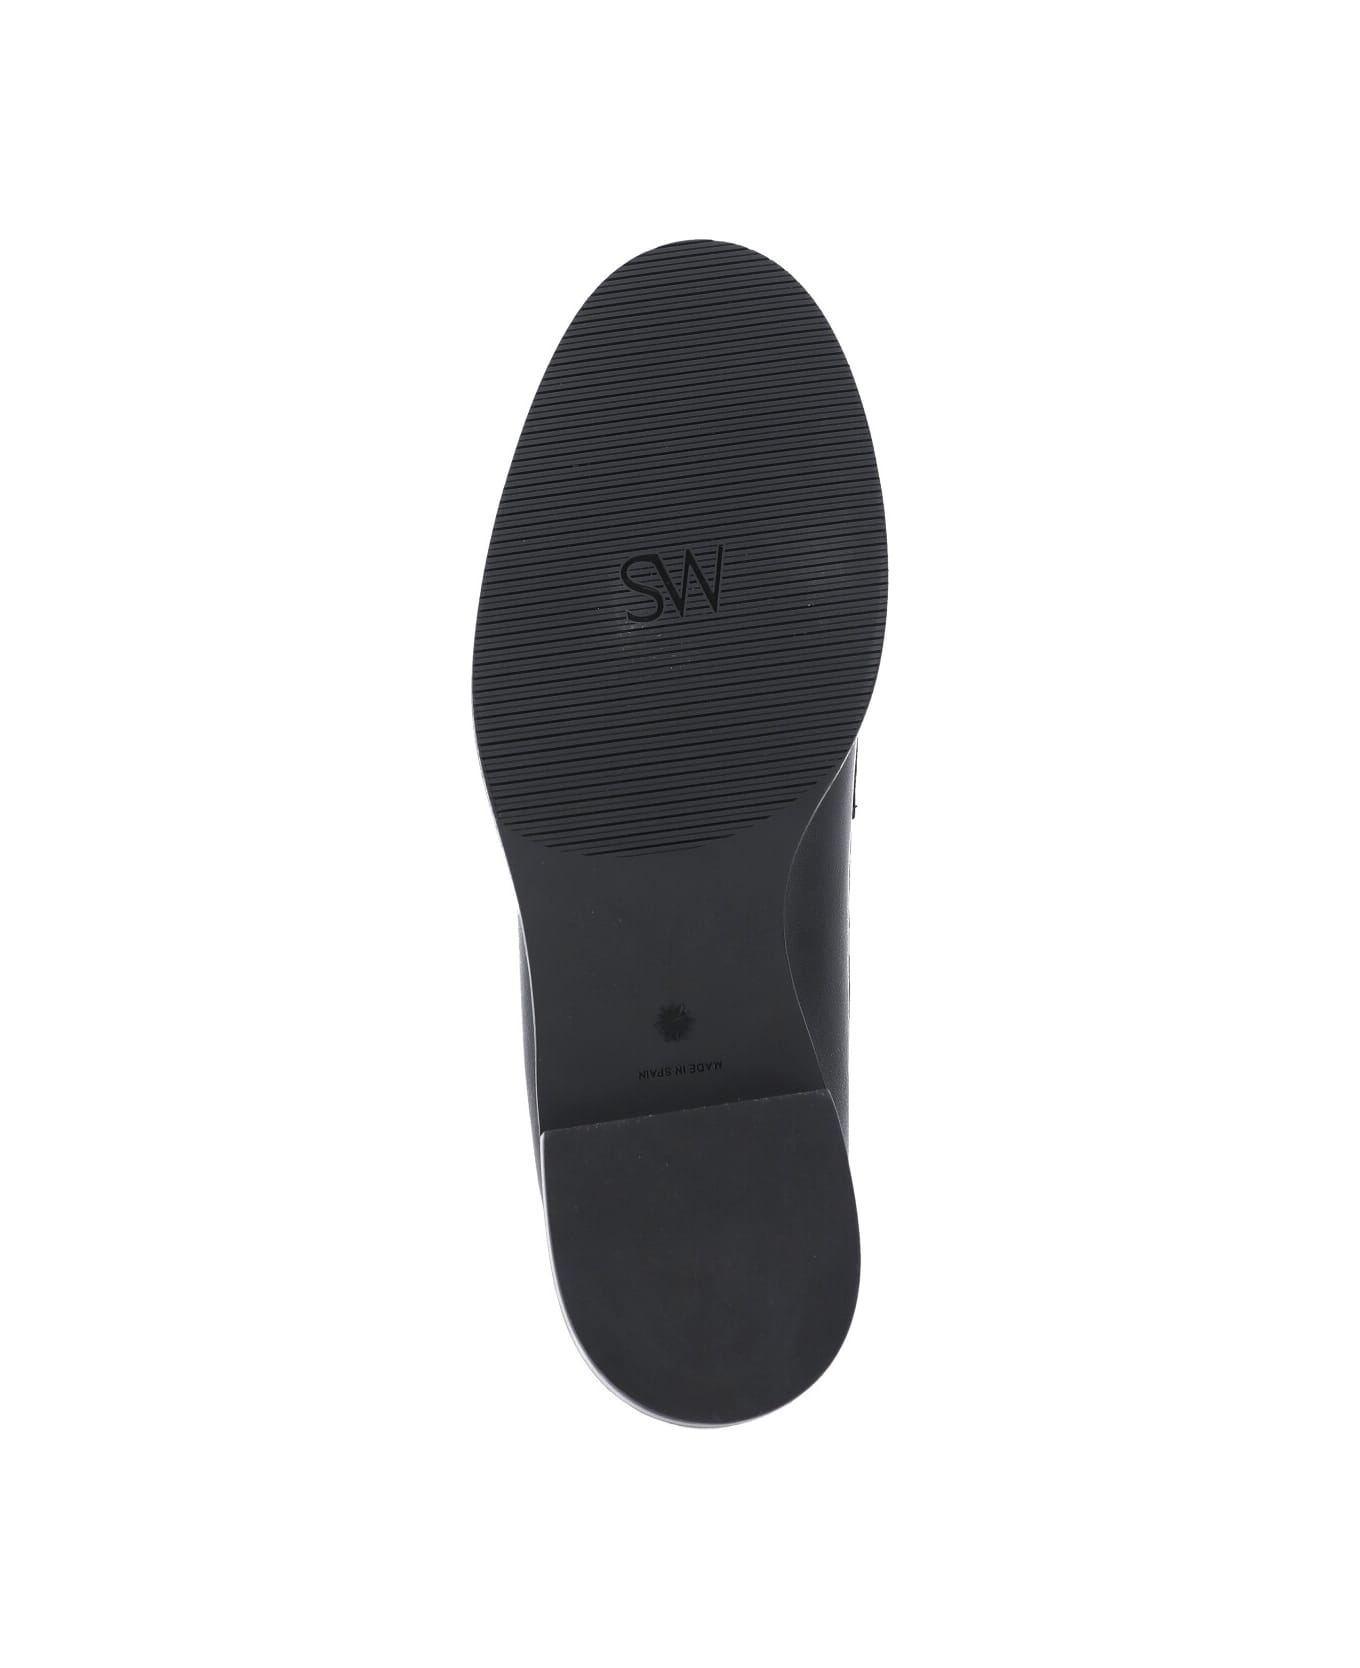 Stuart Weitzman Palmer Sleek Loafers - Black